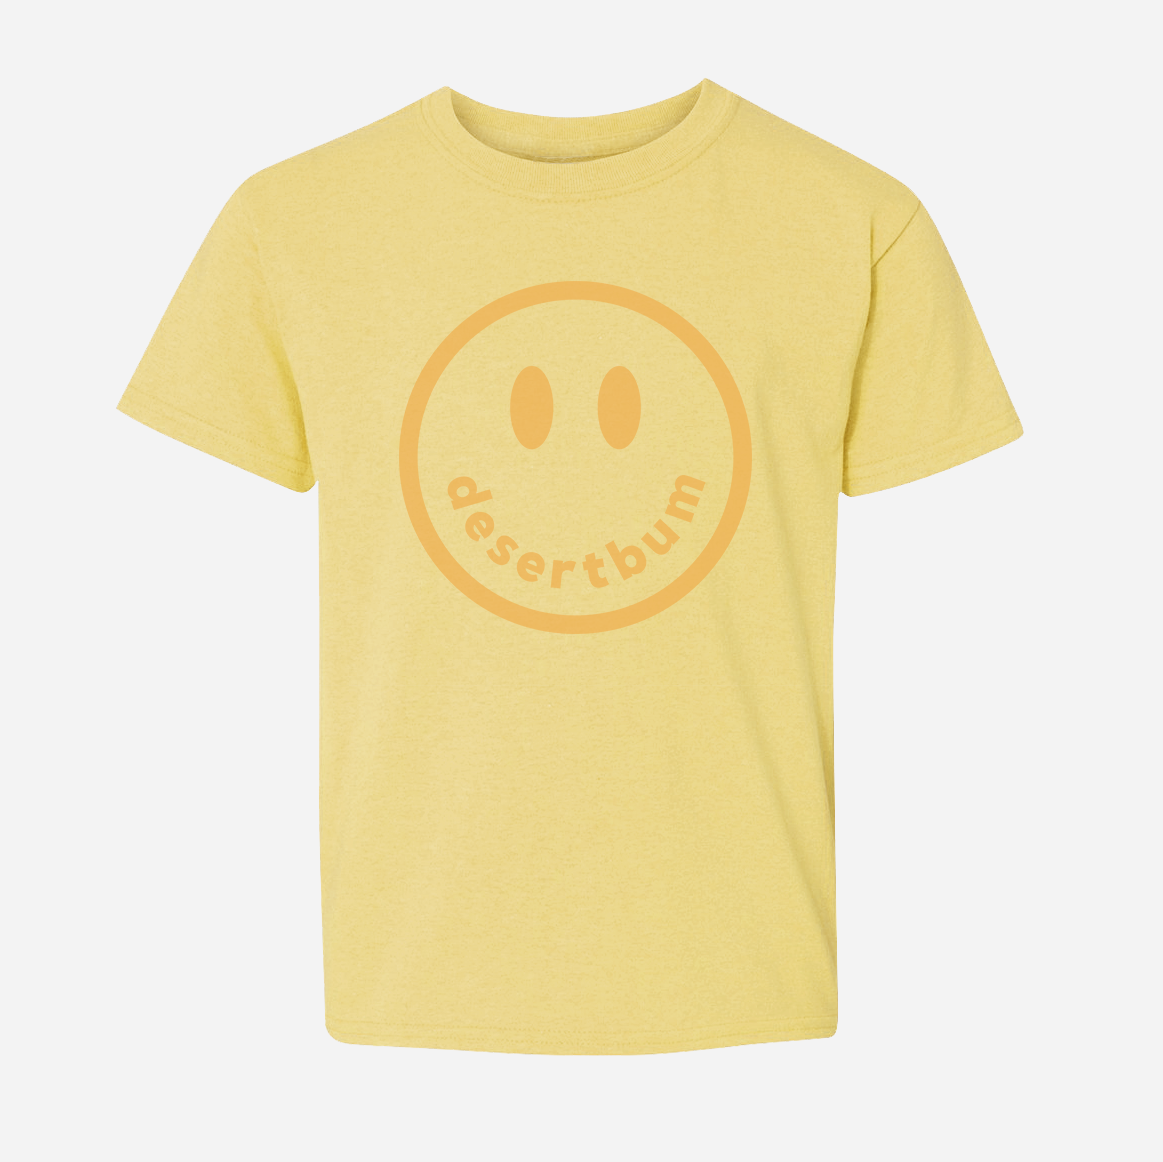 Children's Desert Bum Shirt (Yellow)